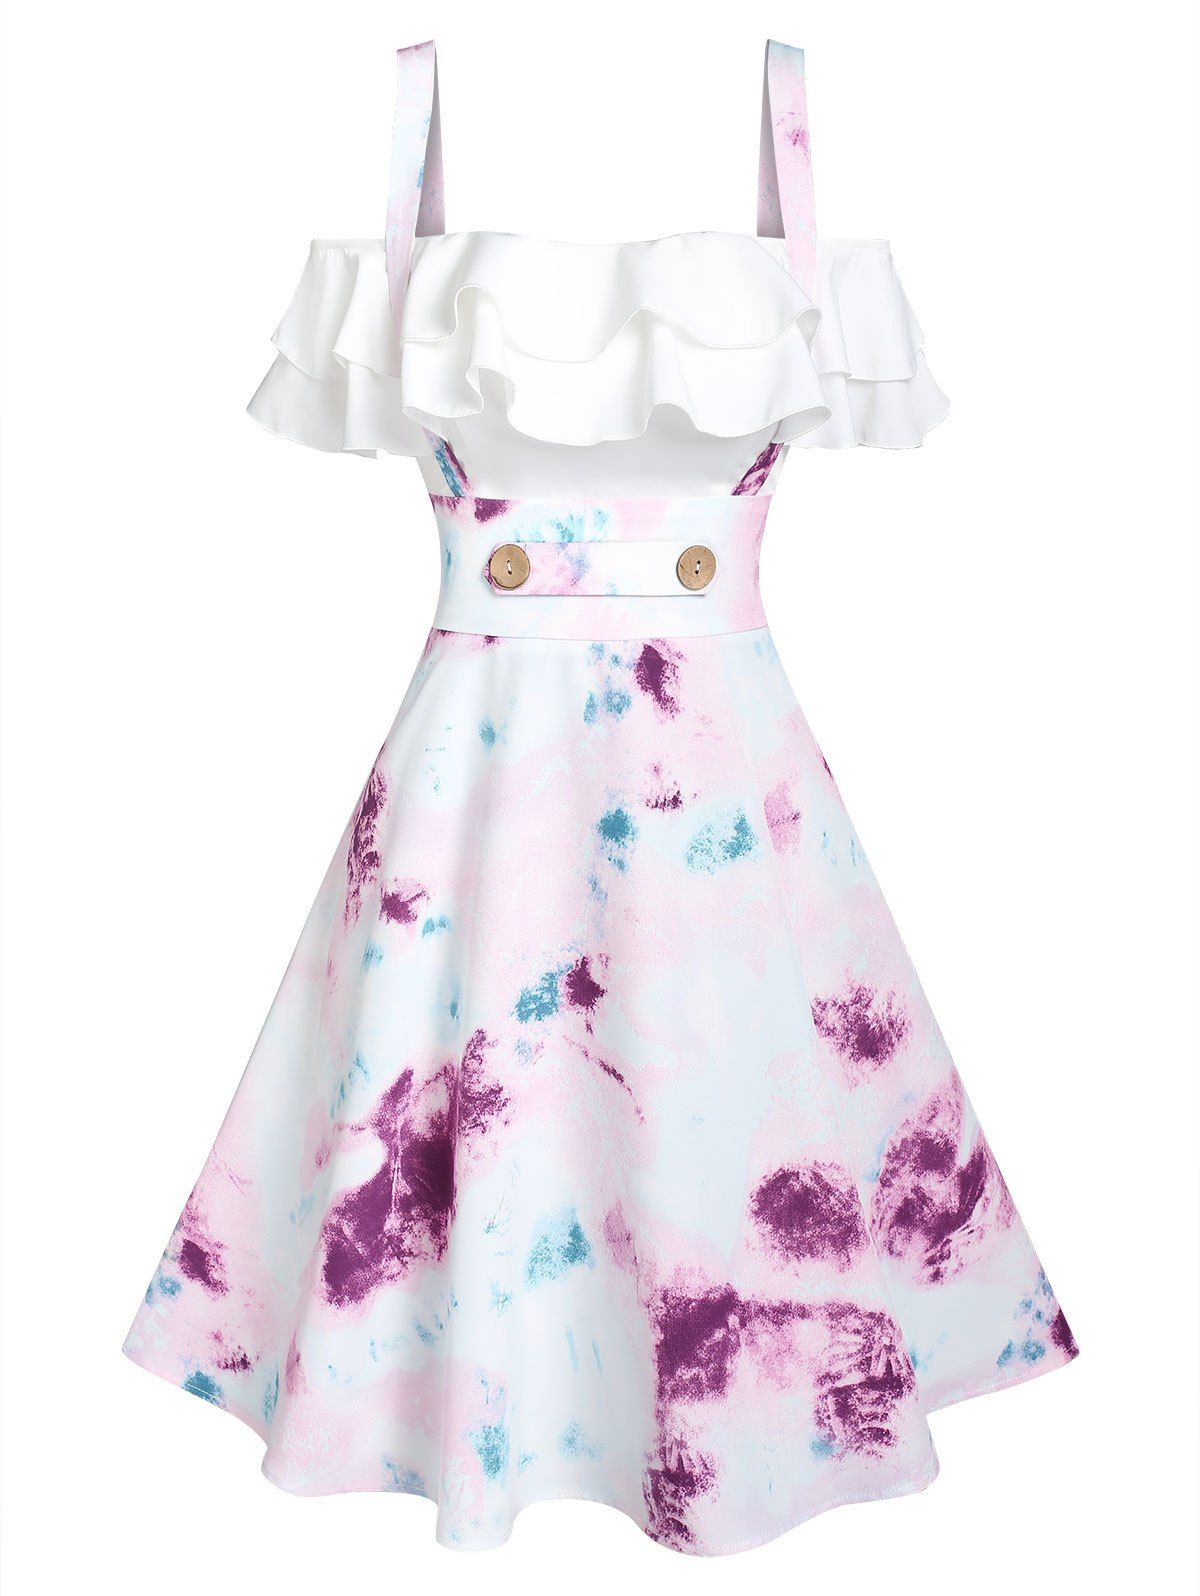 Cold Shoulder Mini Dress Tie Dye Print A Line Dress Mock Button Tiered Frilled Flounce Dress - LIGHT PURPLE XXXL